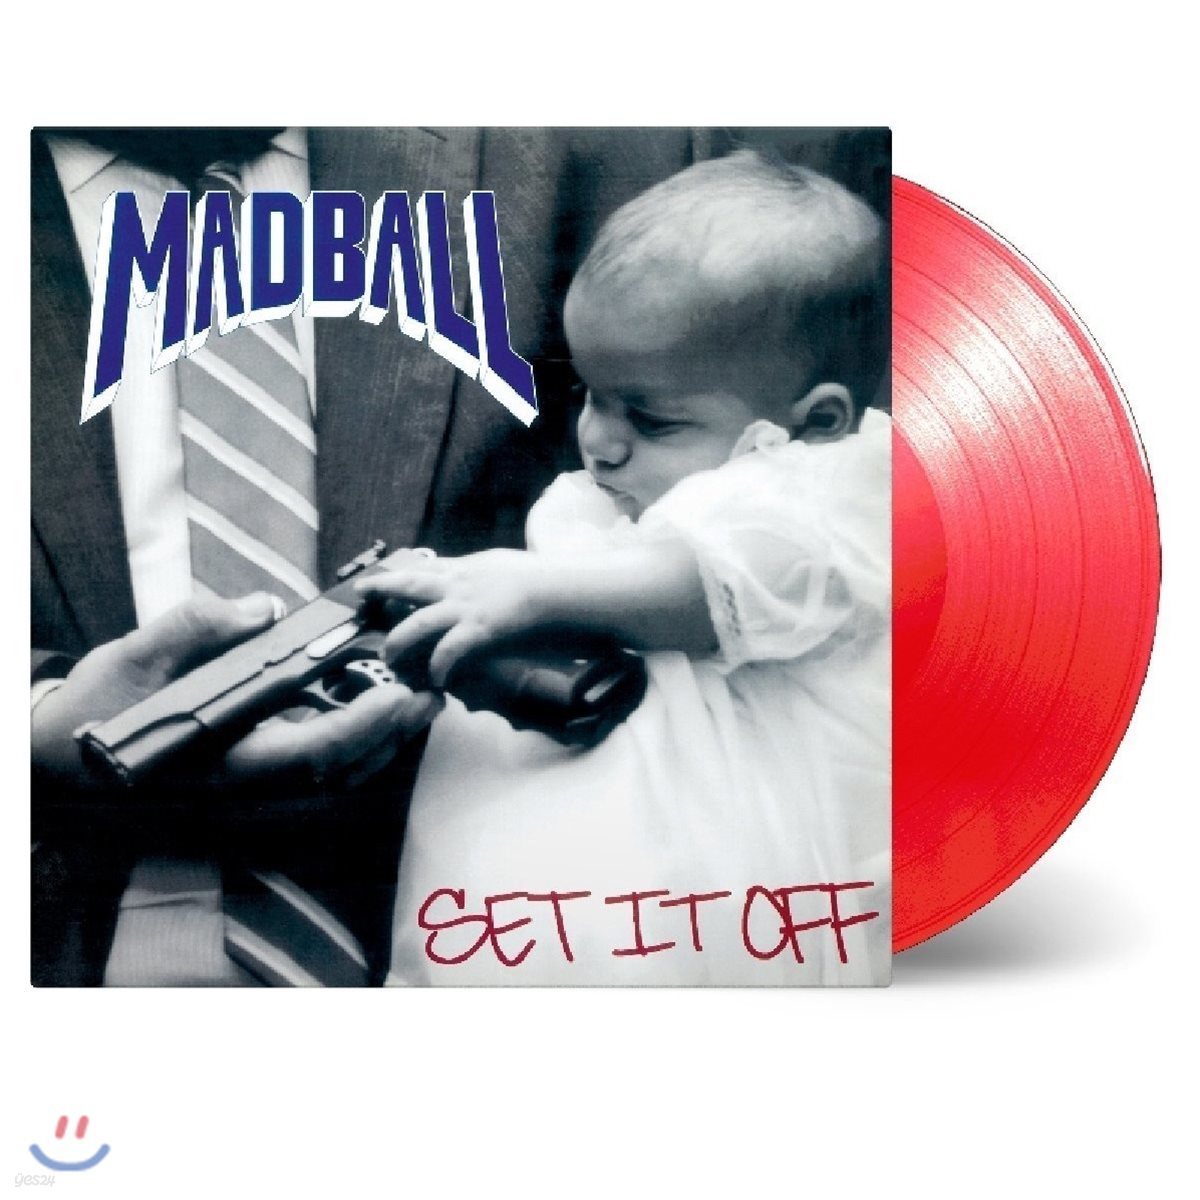 Madball (매드볼) - Set It Off [투명 레드 컬러 LP]